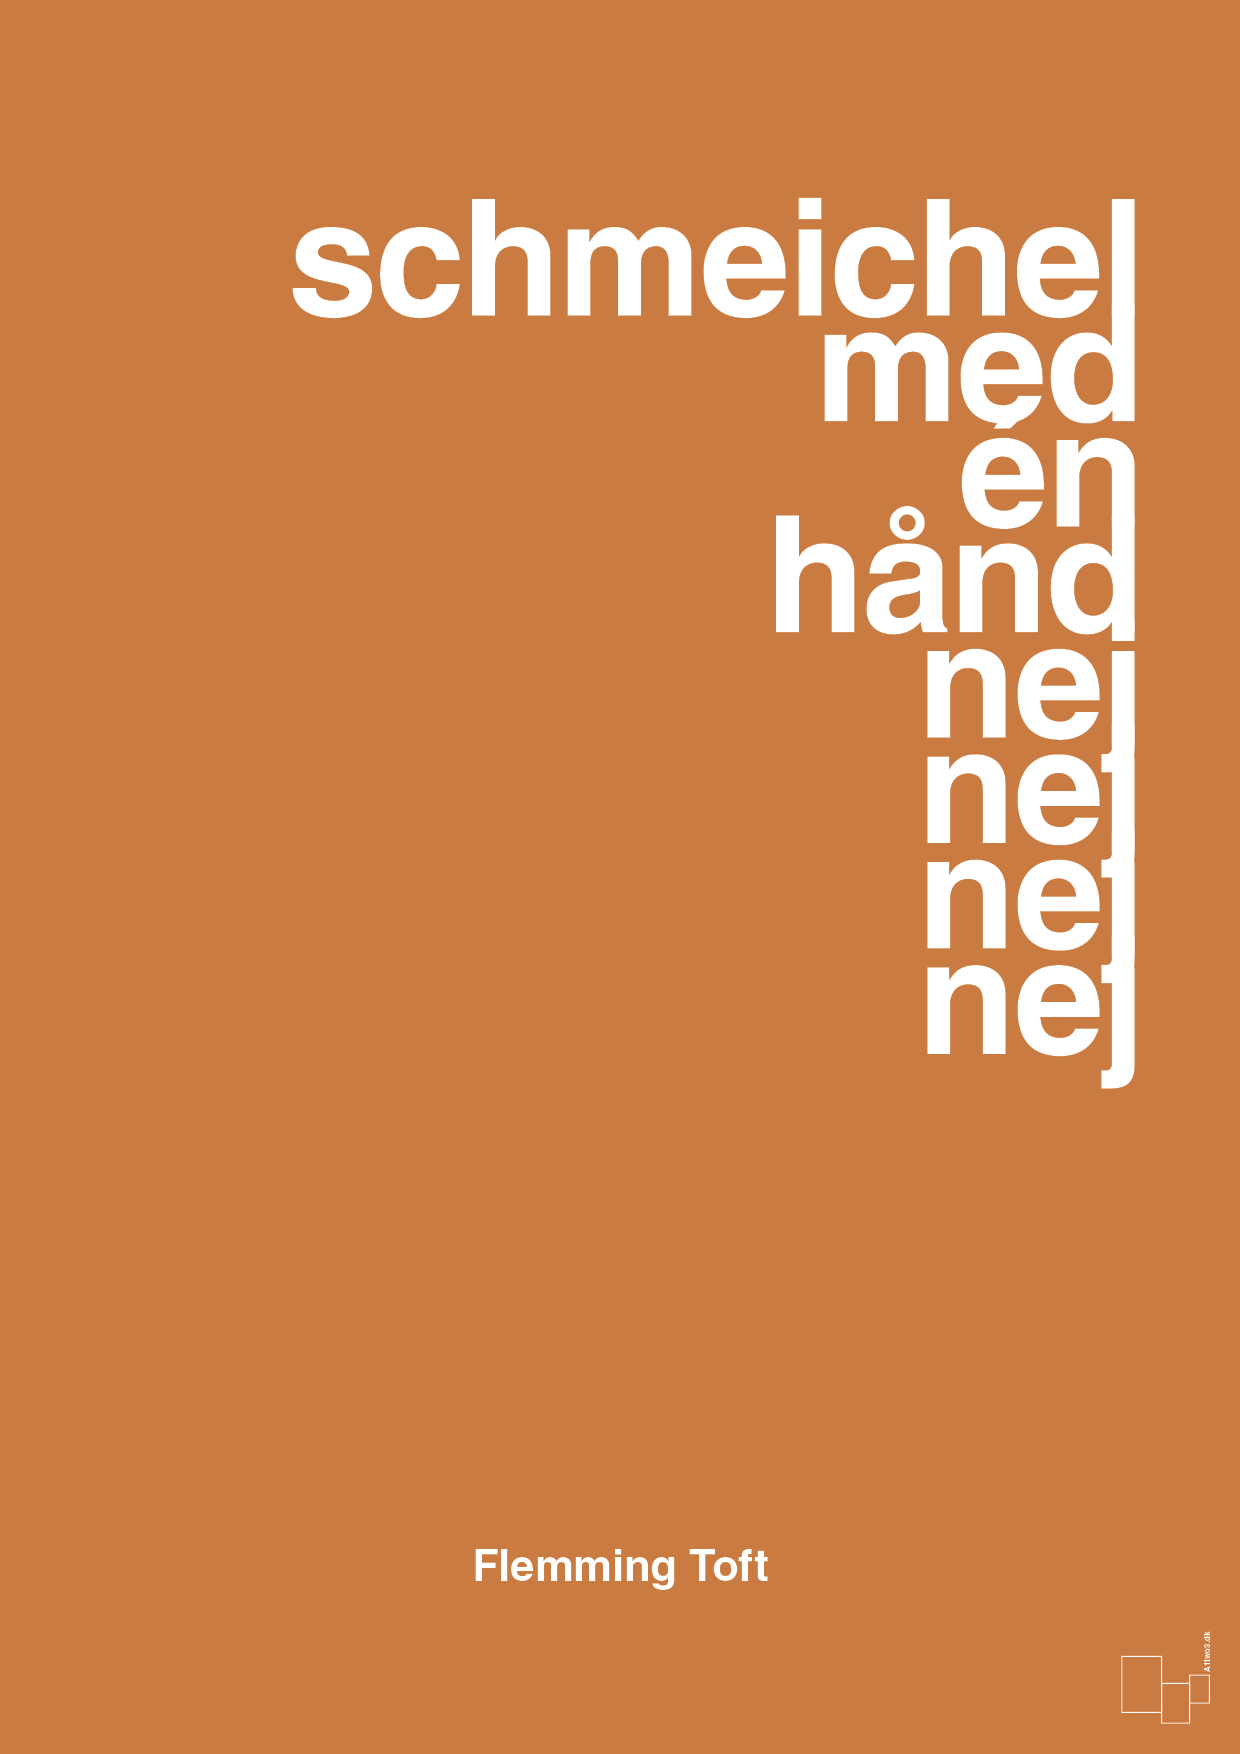 schmeichel med én hånd nej nej nej nej - Plakat med Citater i Rumba Orange